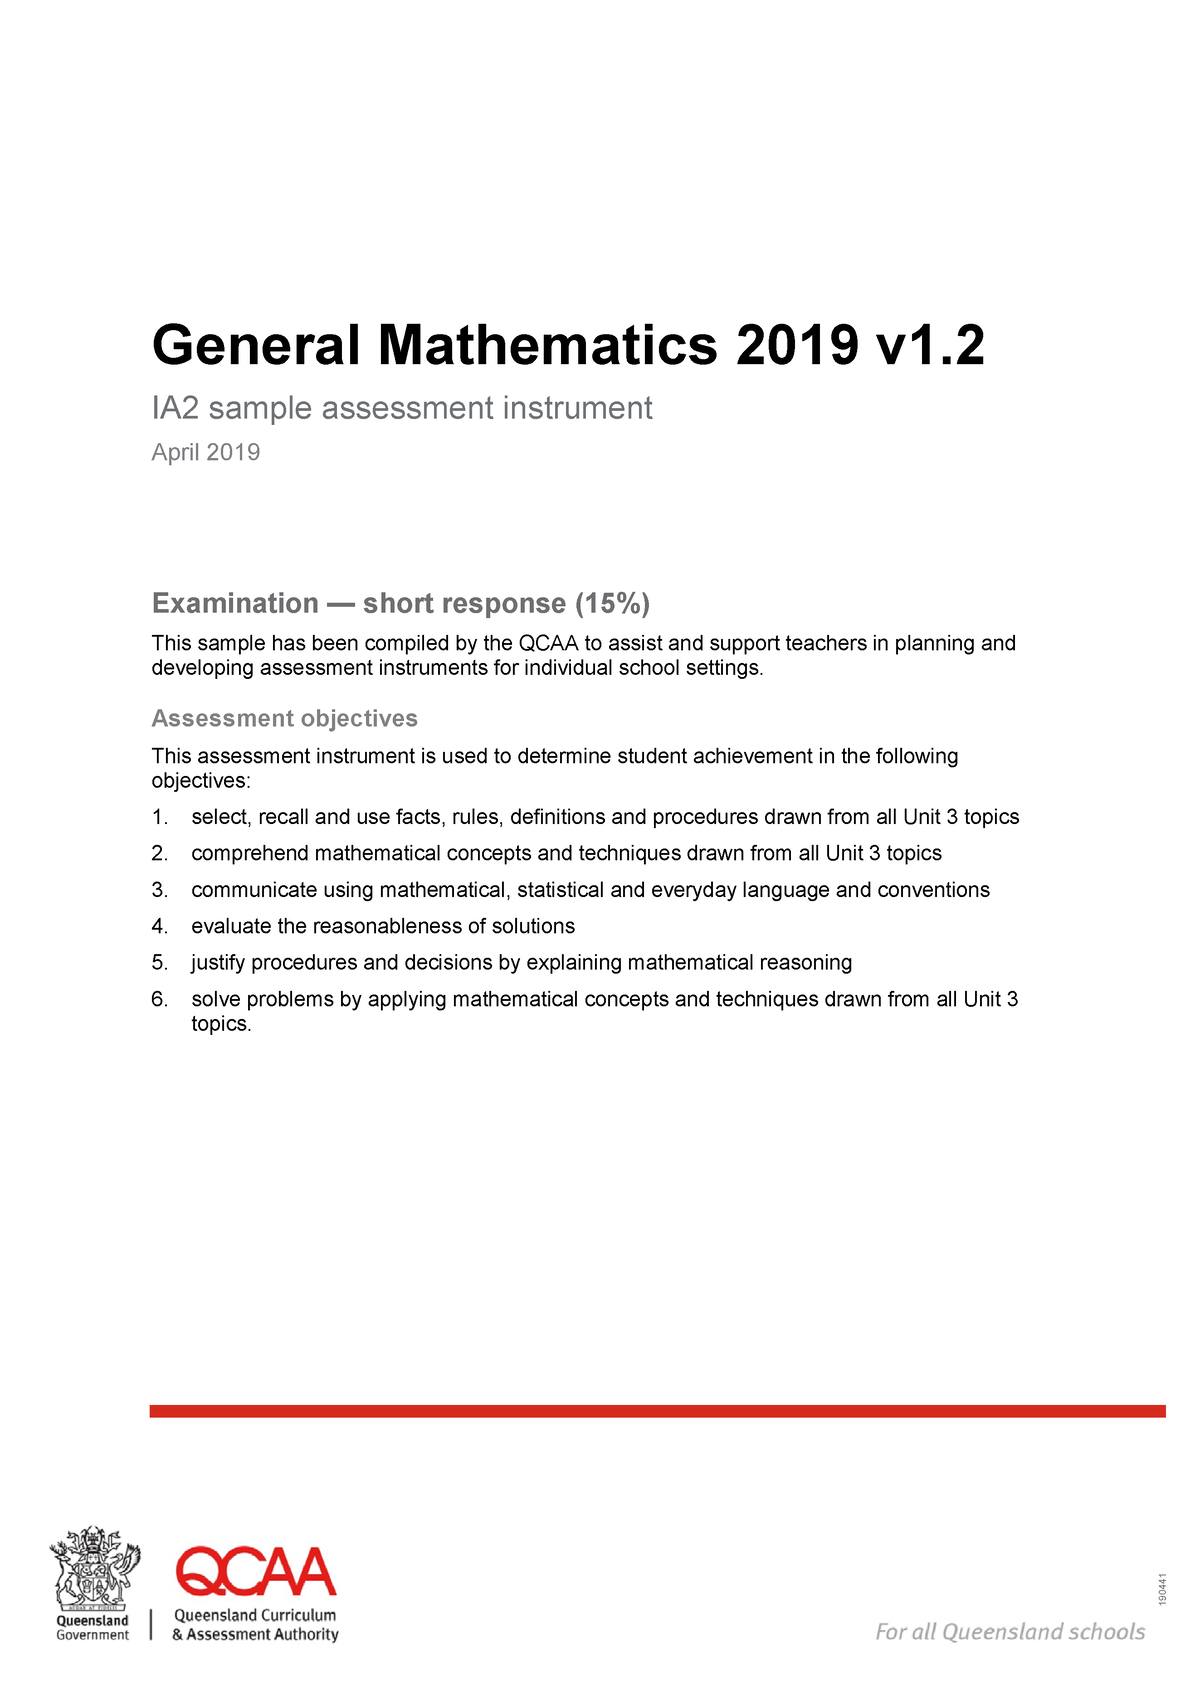 qcaa general maths assignment example